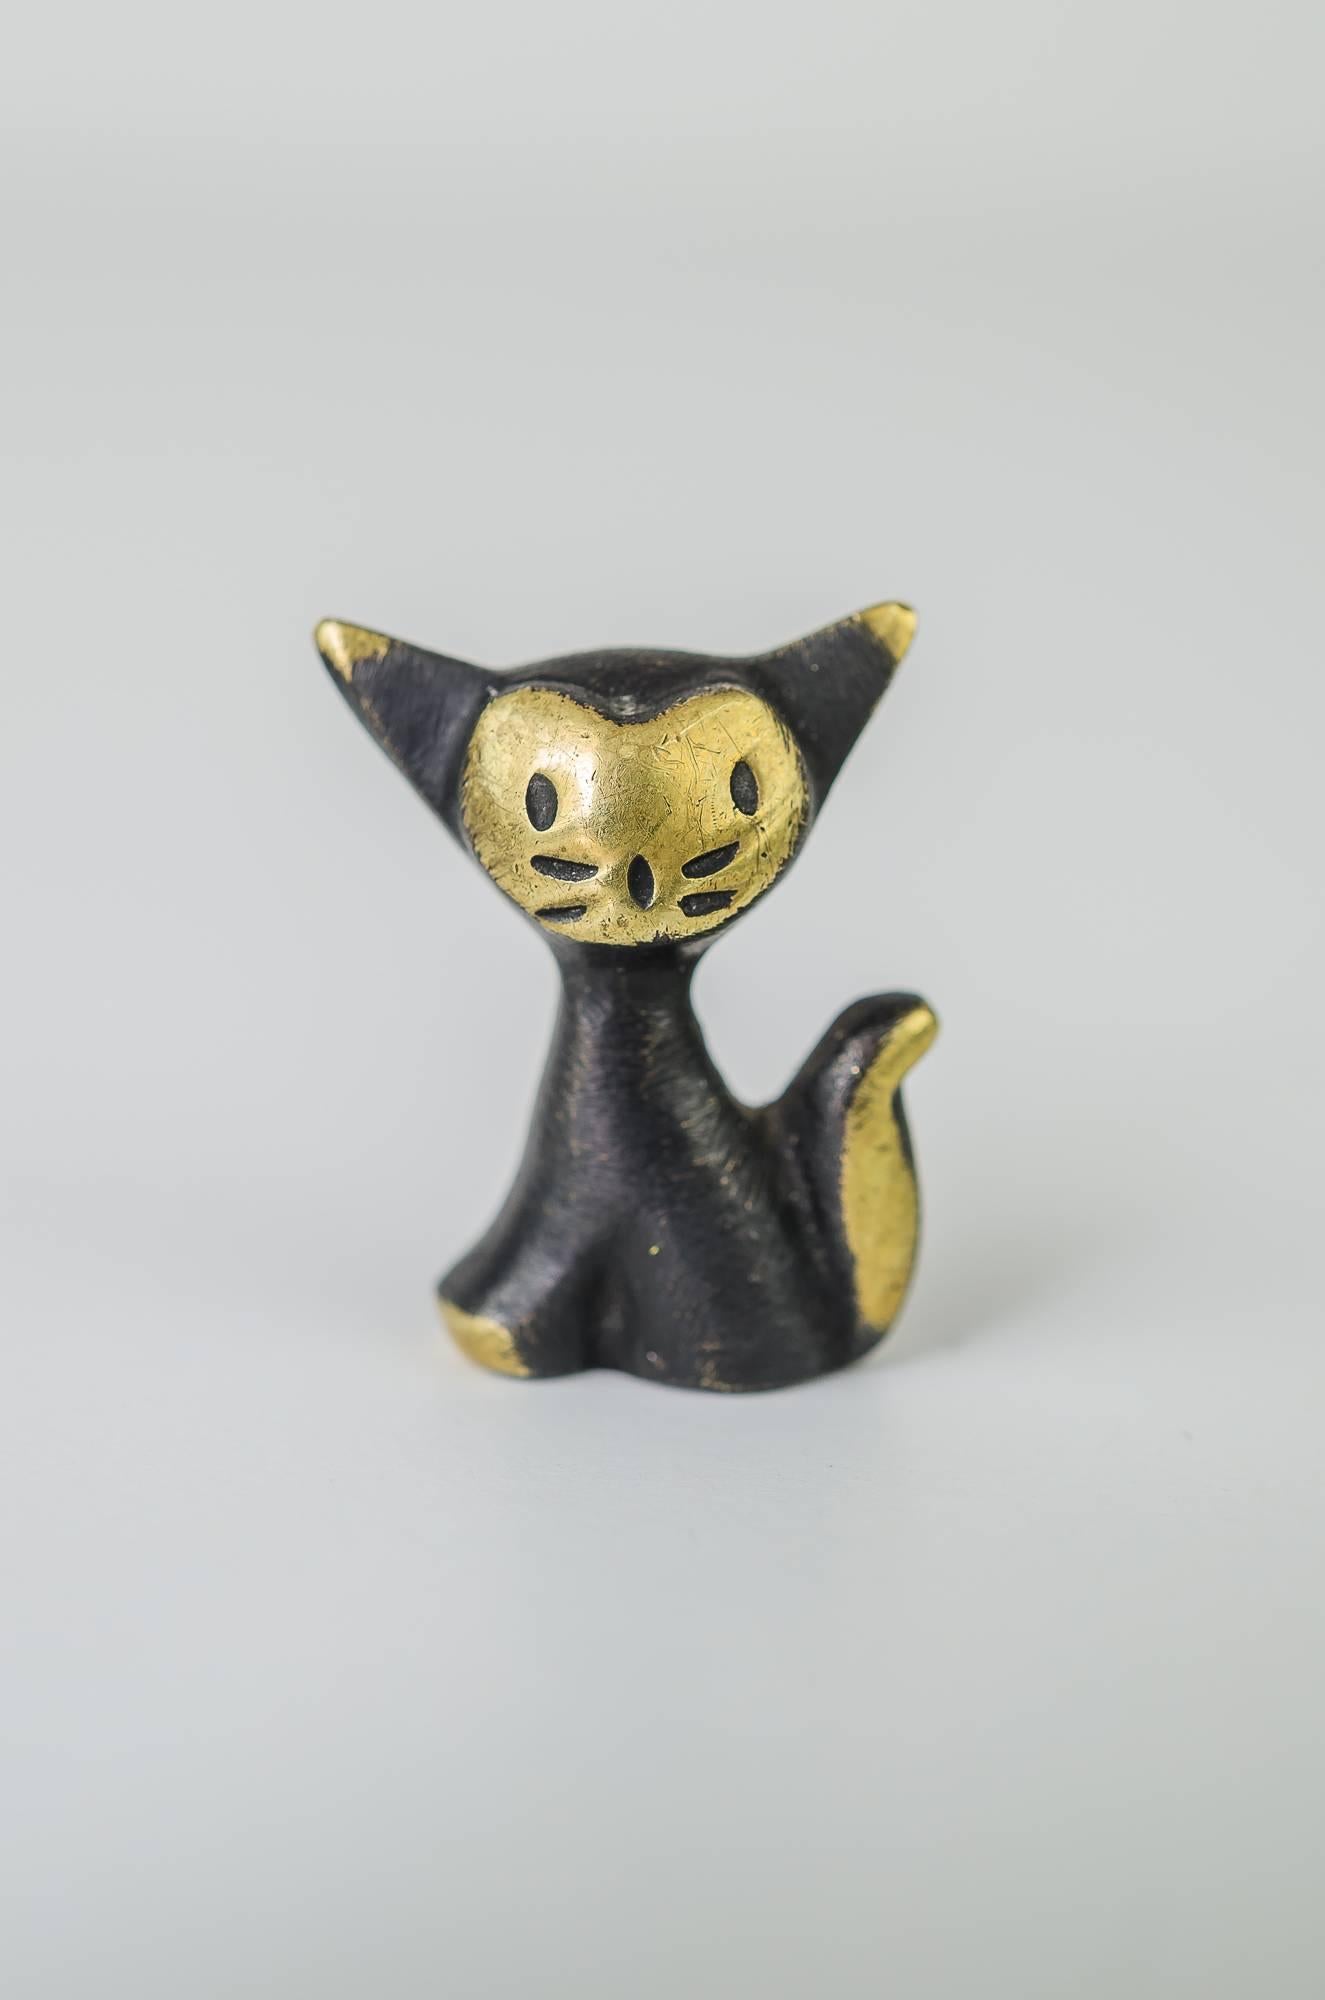 Small cat figurine by walter bosse.
Original condition.